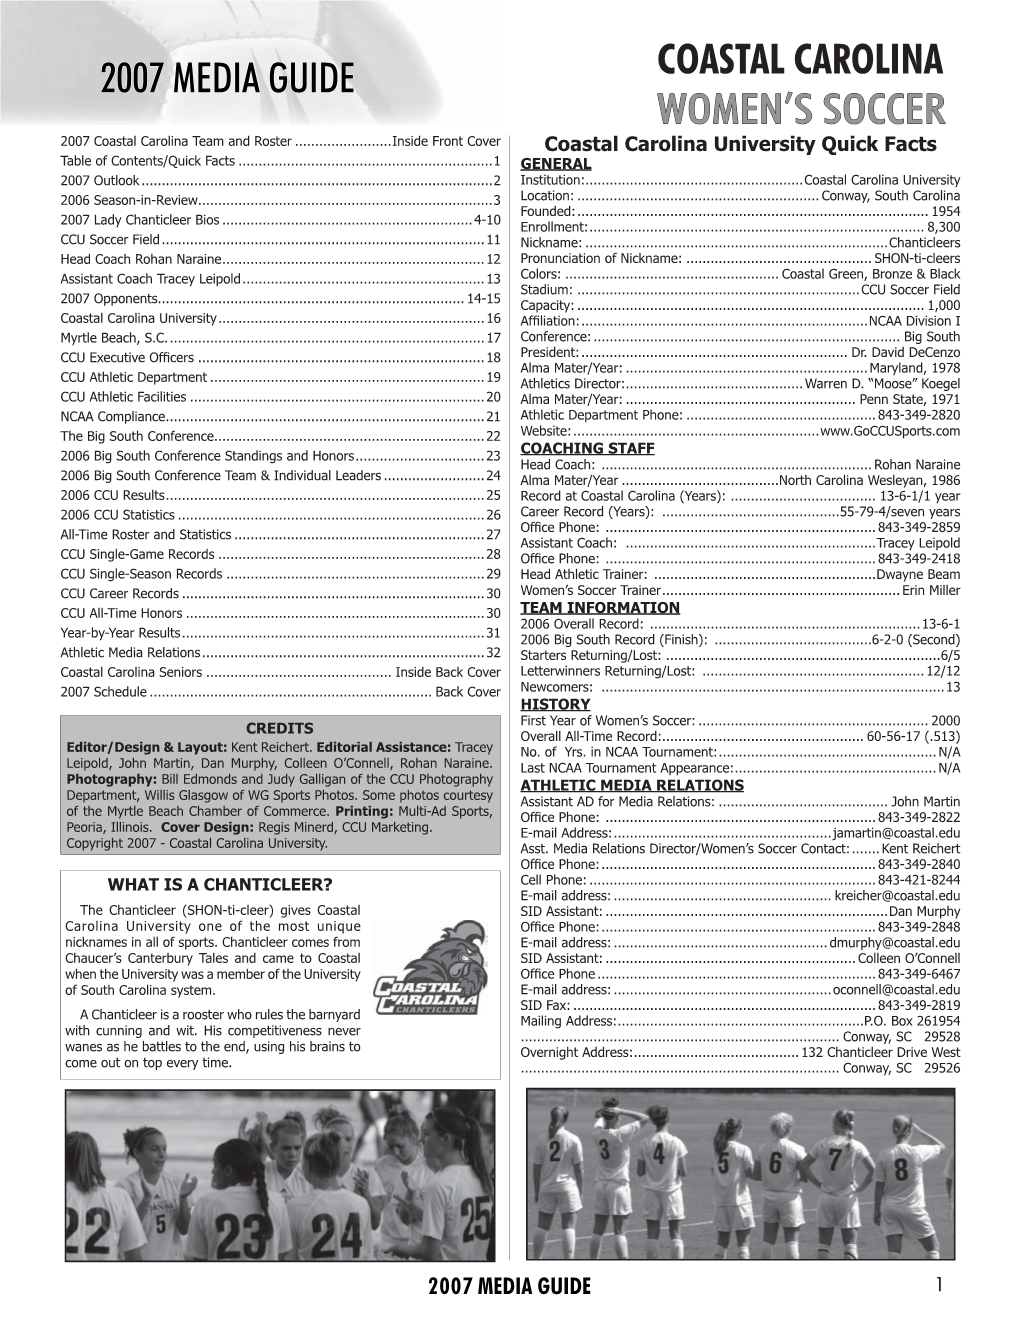 Coastal Carolina Women's Soccer 2007 Media Guide